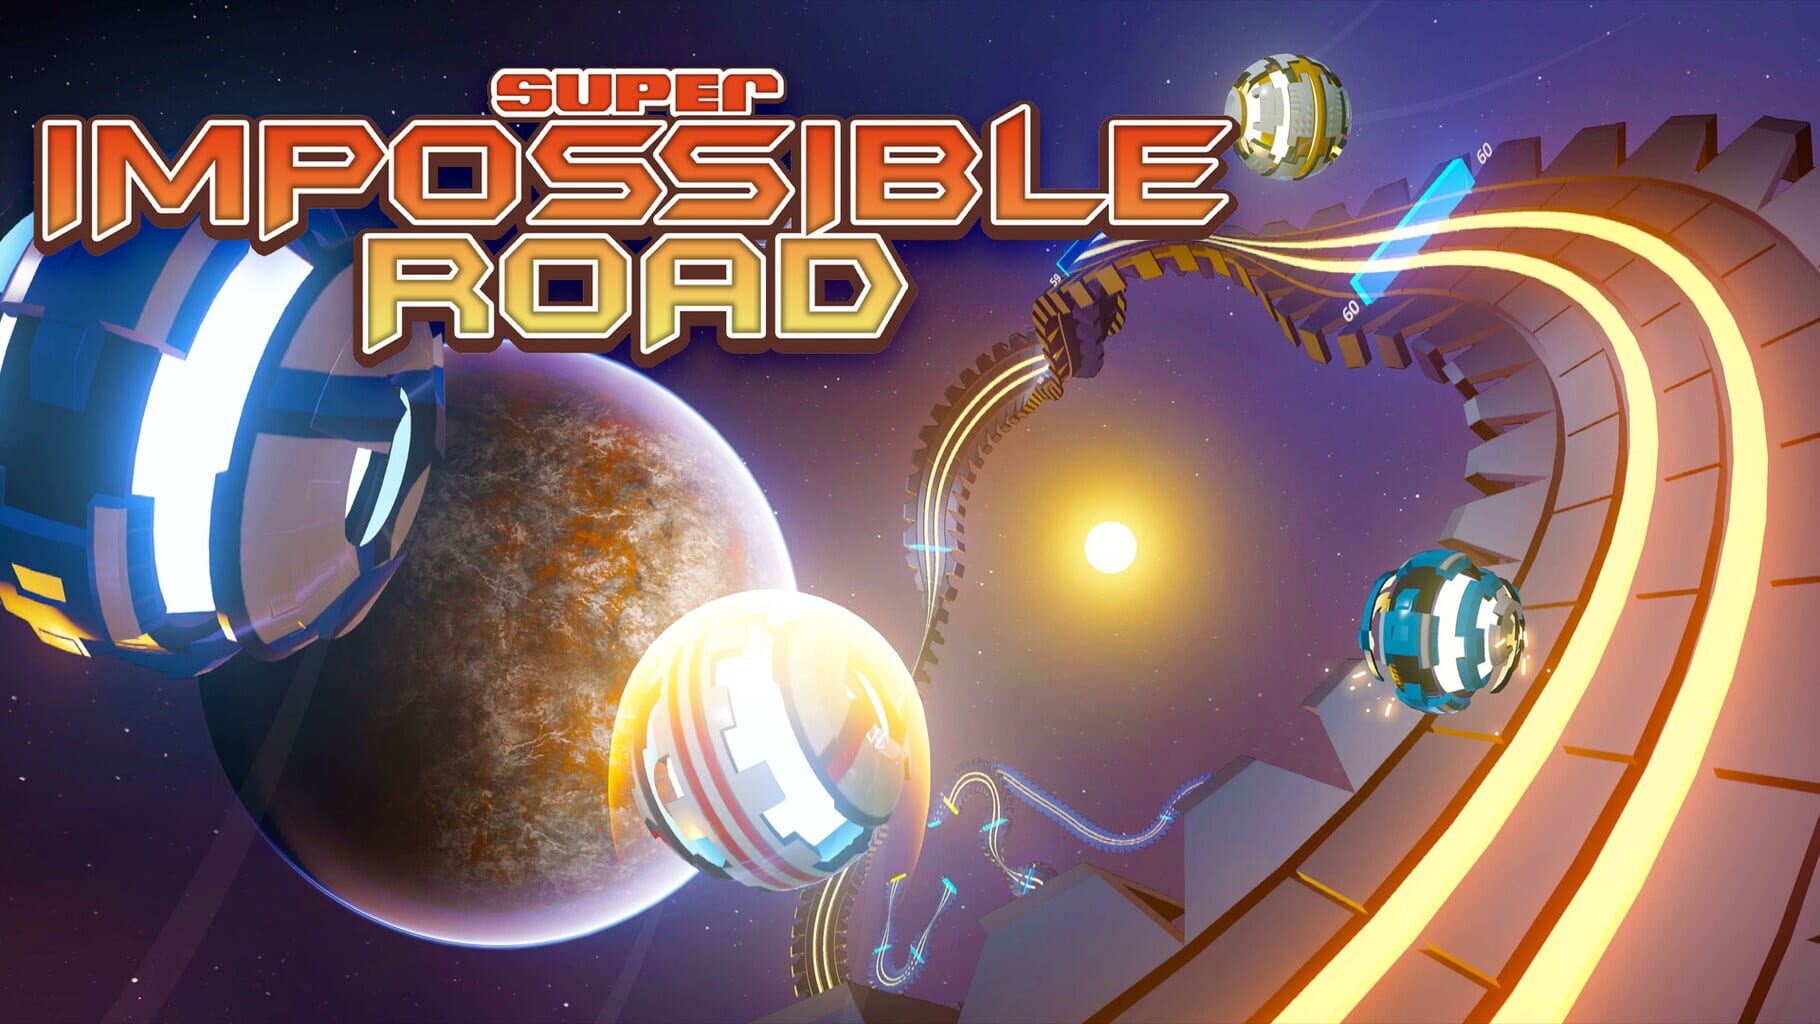 Super Impossible Road artwork